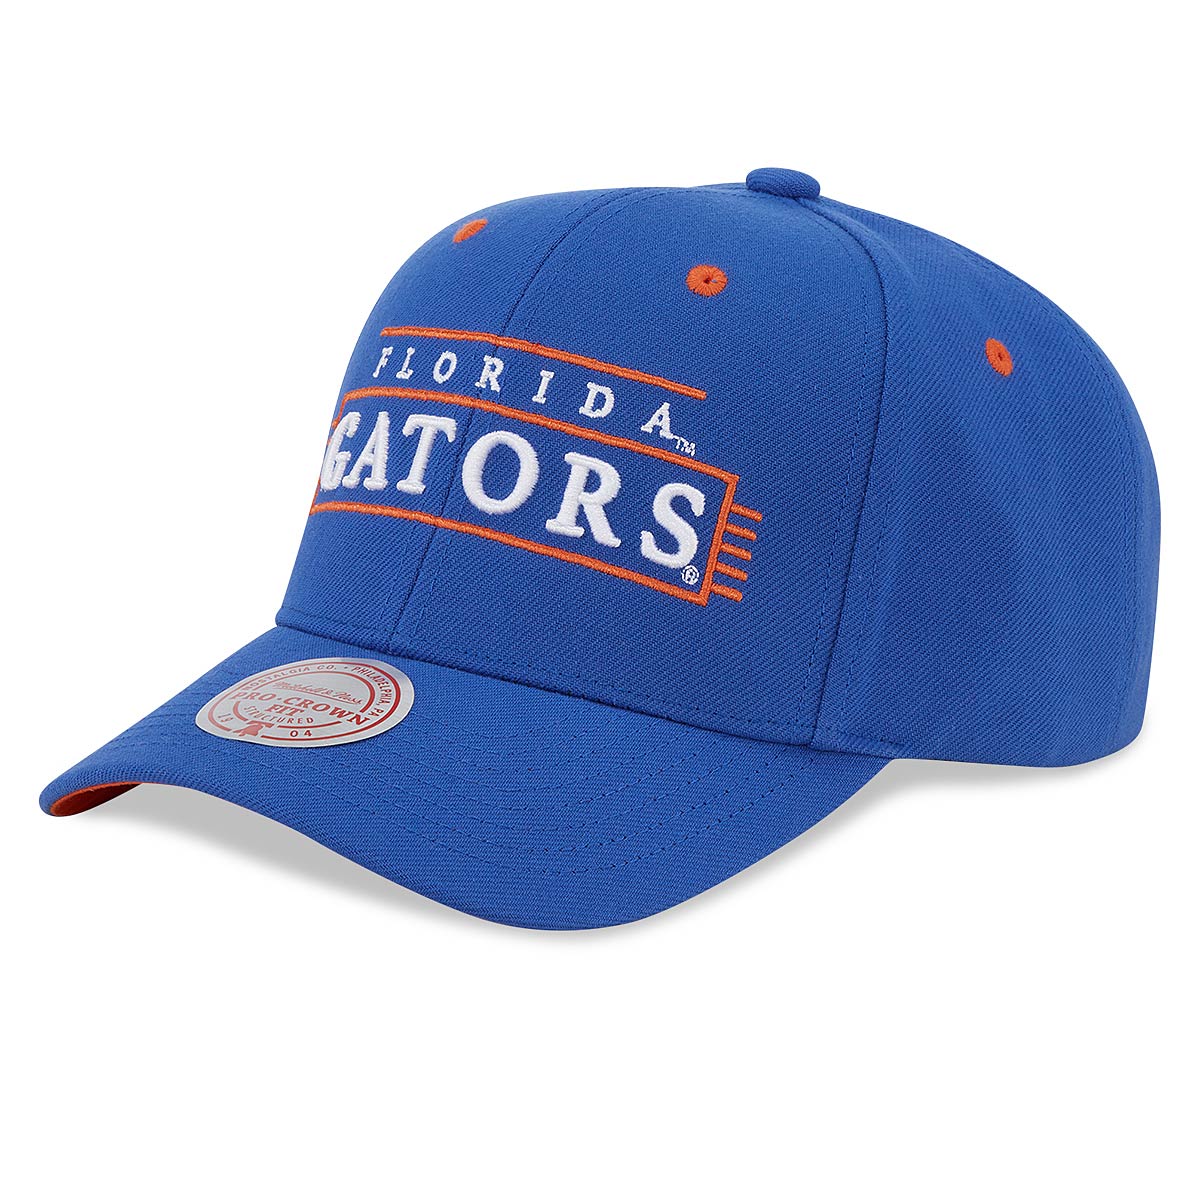 Kaufen Sie NCAA FLORIDA GATORS TEAM LOFI PRO SNAPBACK CAP auf KICKZ.com!